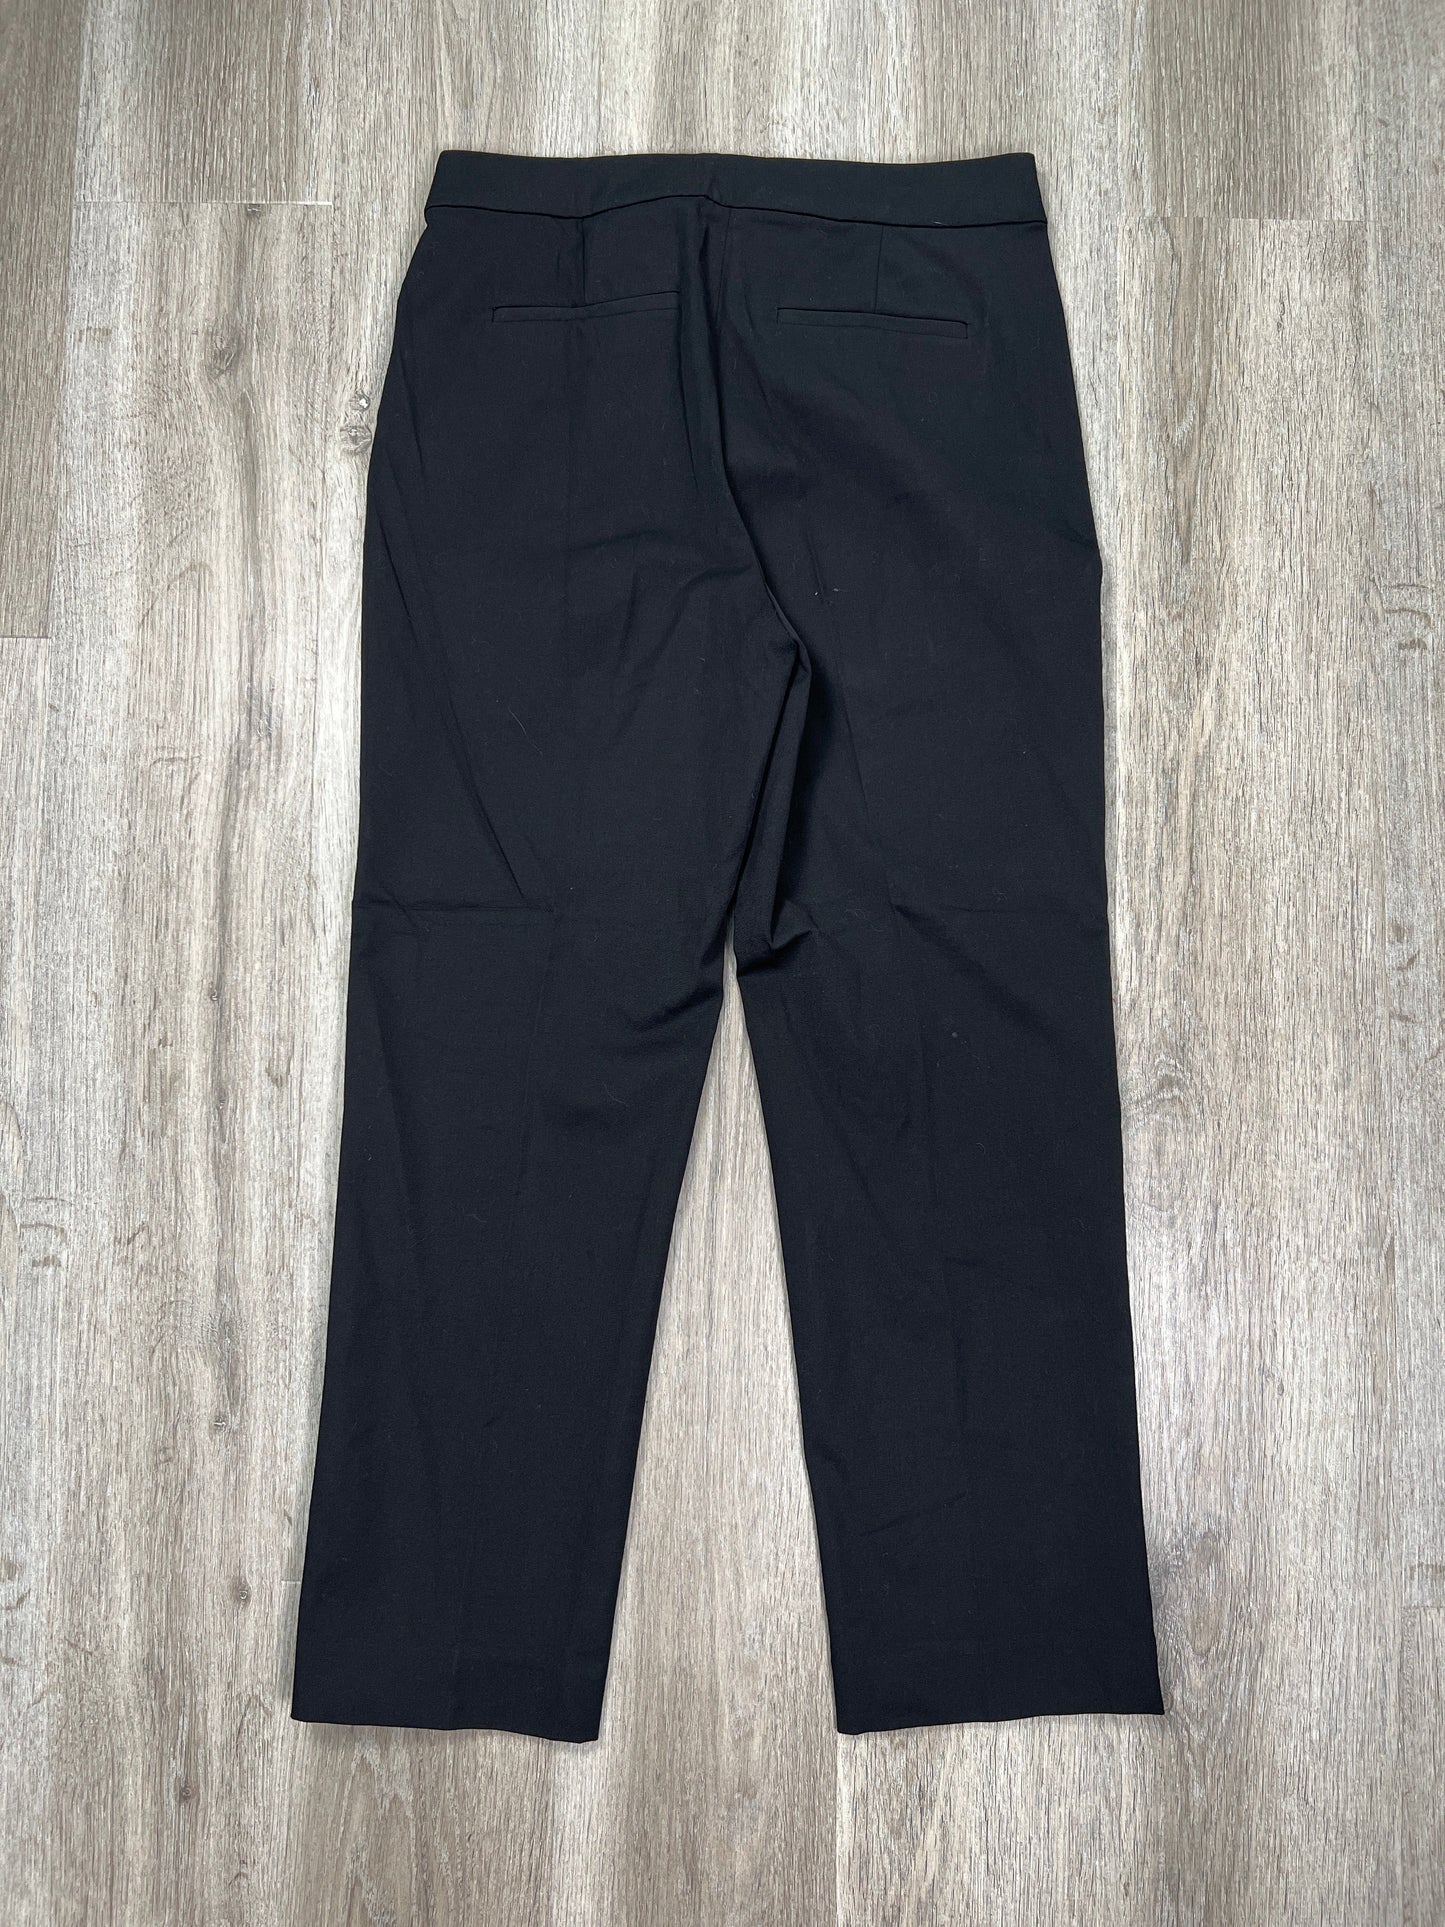 Black Pants Dress J. Crew, Size M